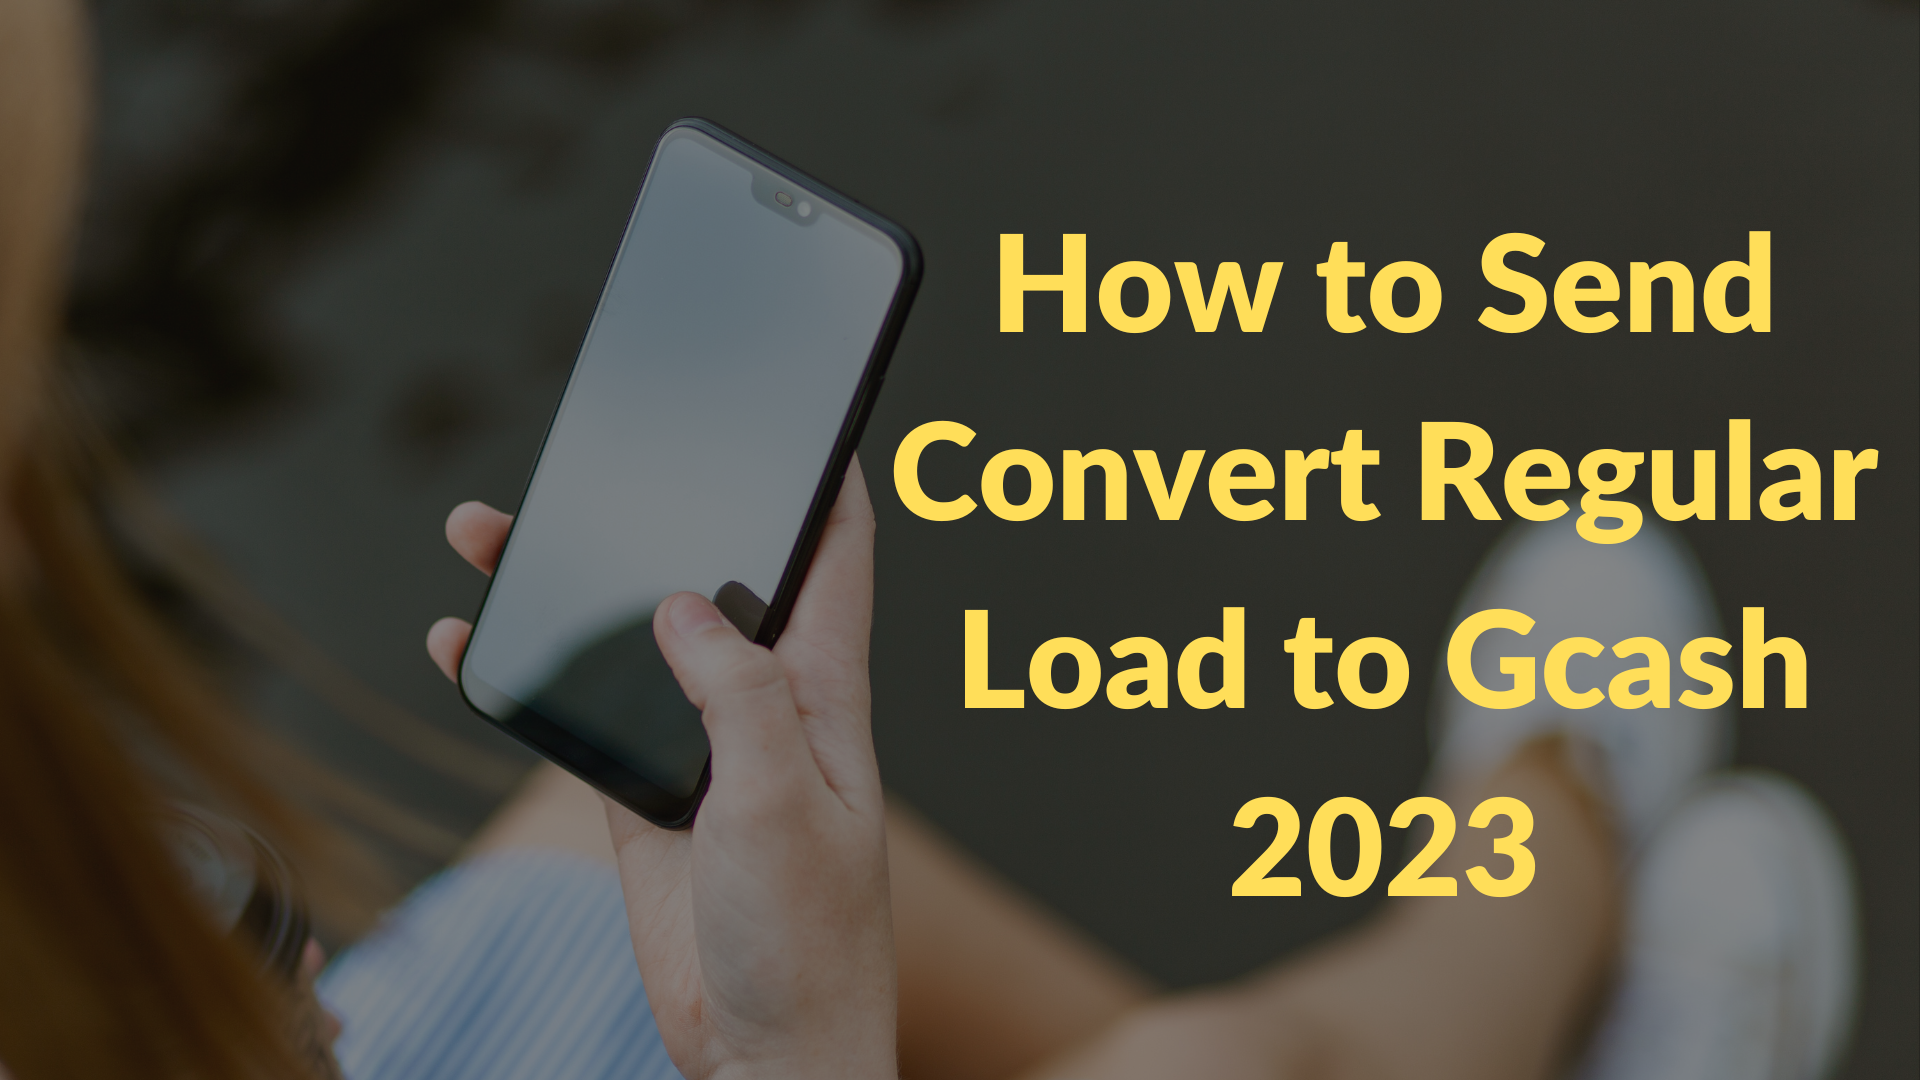 How to Send Convert Regular Load to Gcash 2023